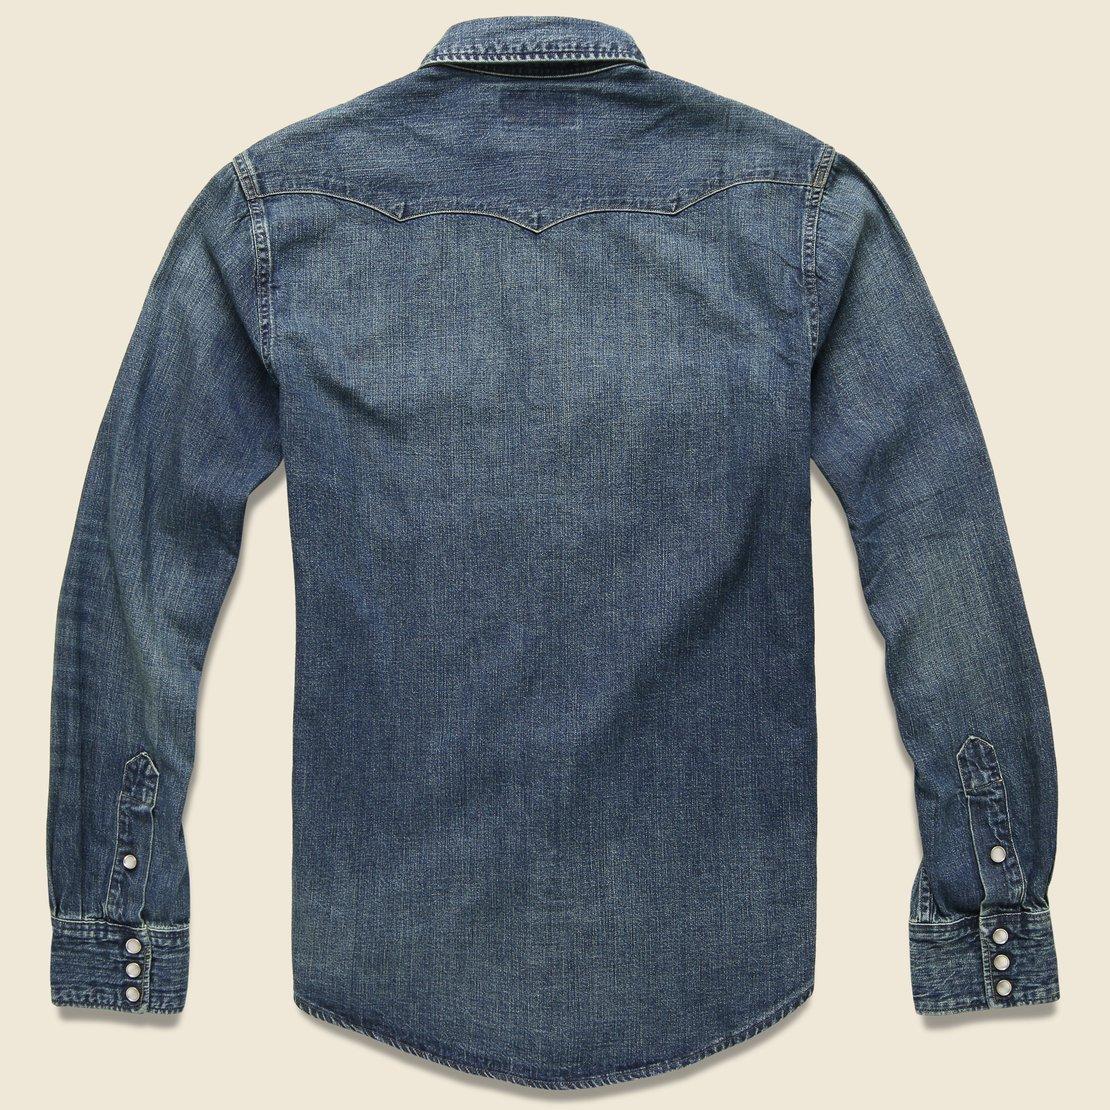 RRL Slim Fit Denim Western Shirt - Dark Wash in Blue for Men - Lyst